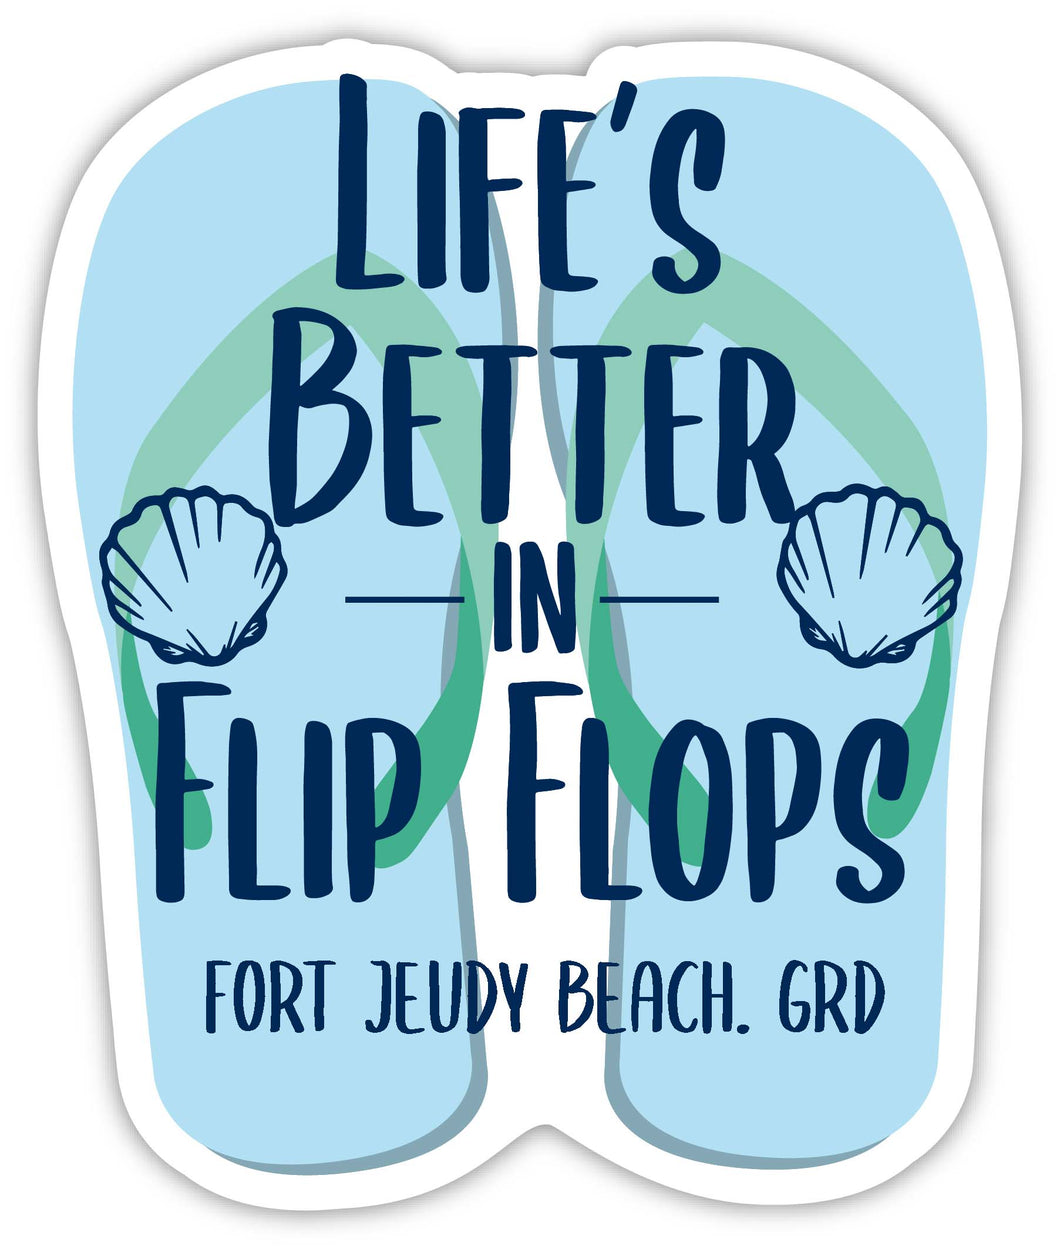 Fort Jeudy Beach Grenada Souvenir 4 Inch Vinyl Decal Sticker Flip Flop Design